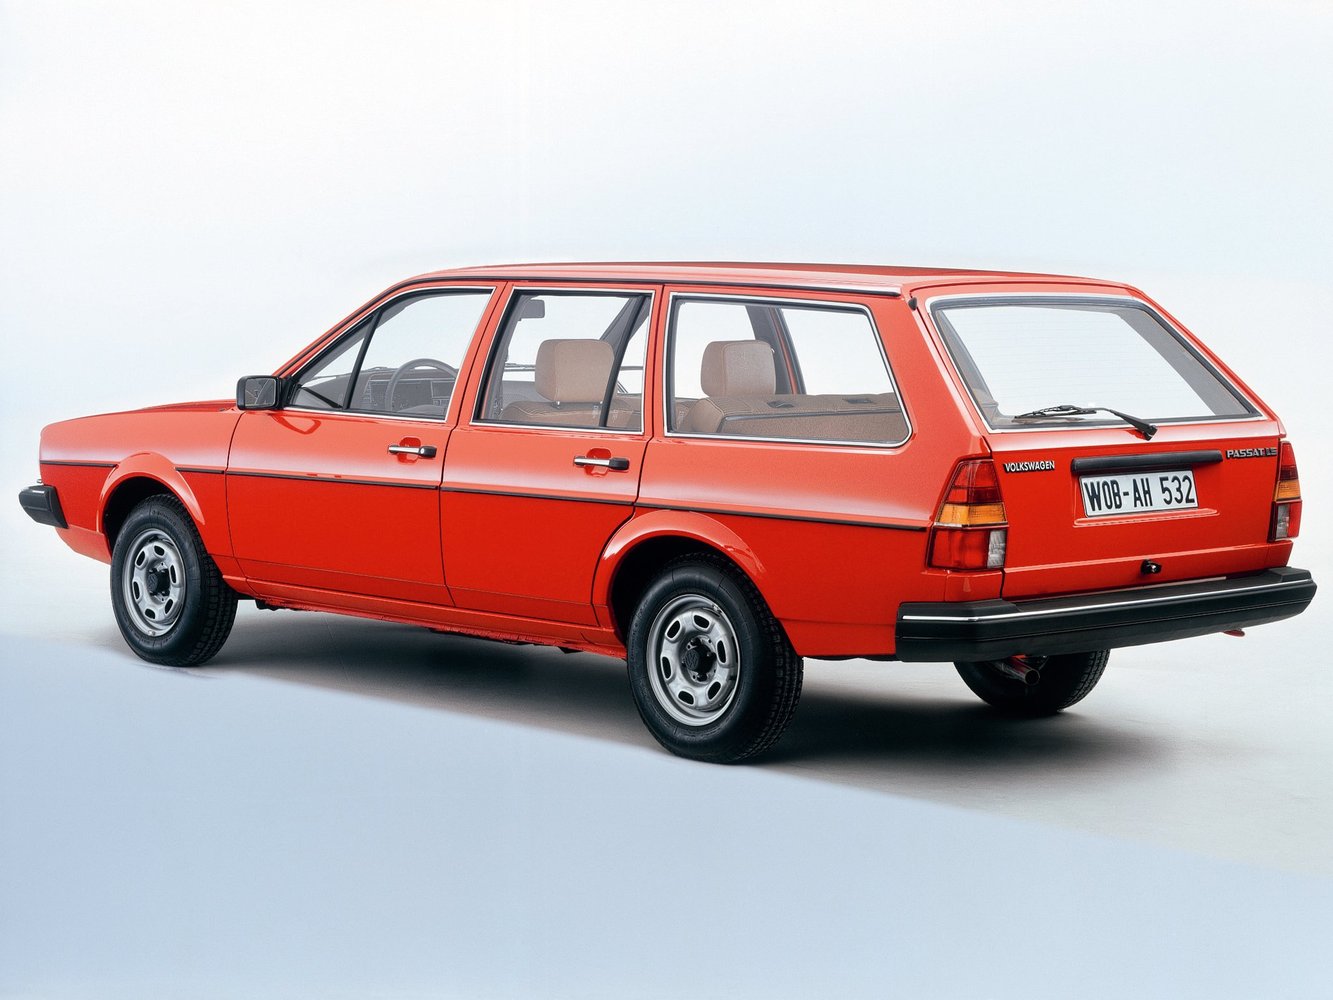 универсал Volkswagen Passat 1980 - 1988г выпуска модификация 1.3 MT (55 л.с.)